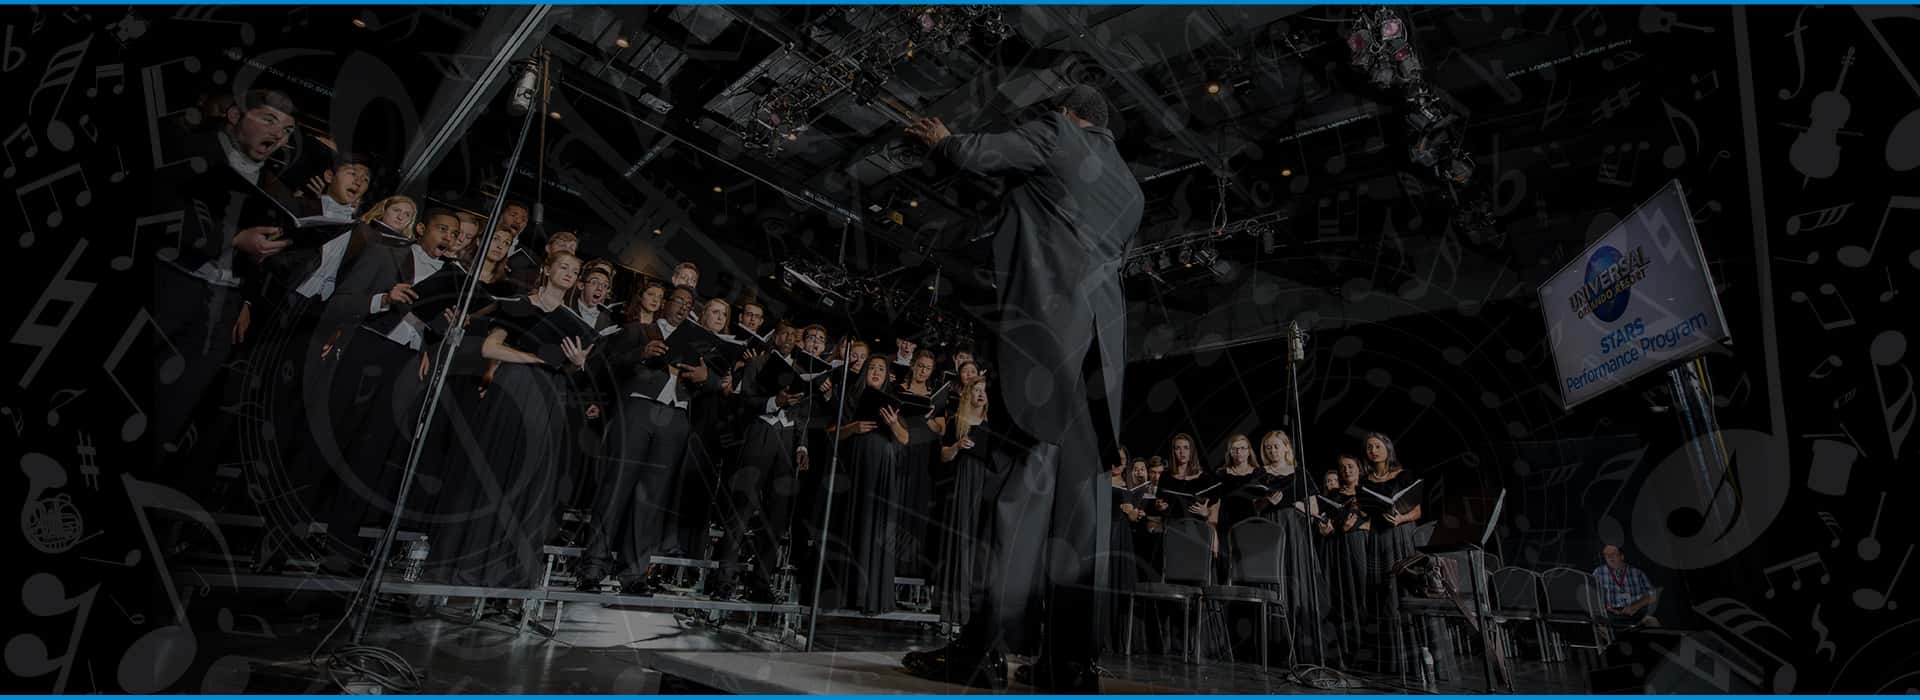 Universal Orlando Resort choir tours